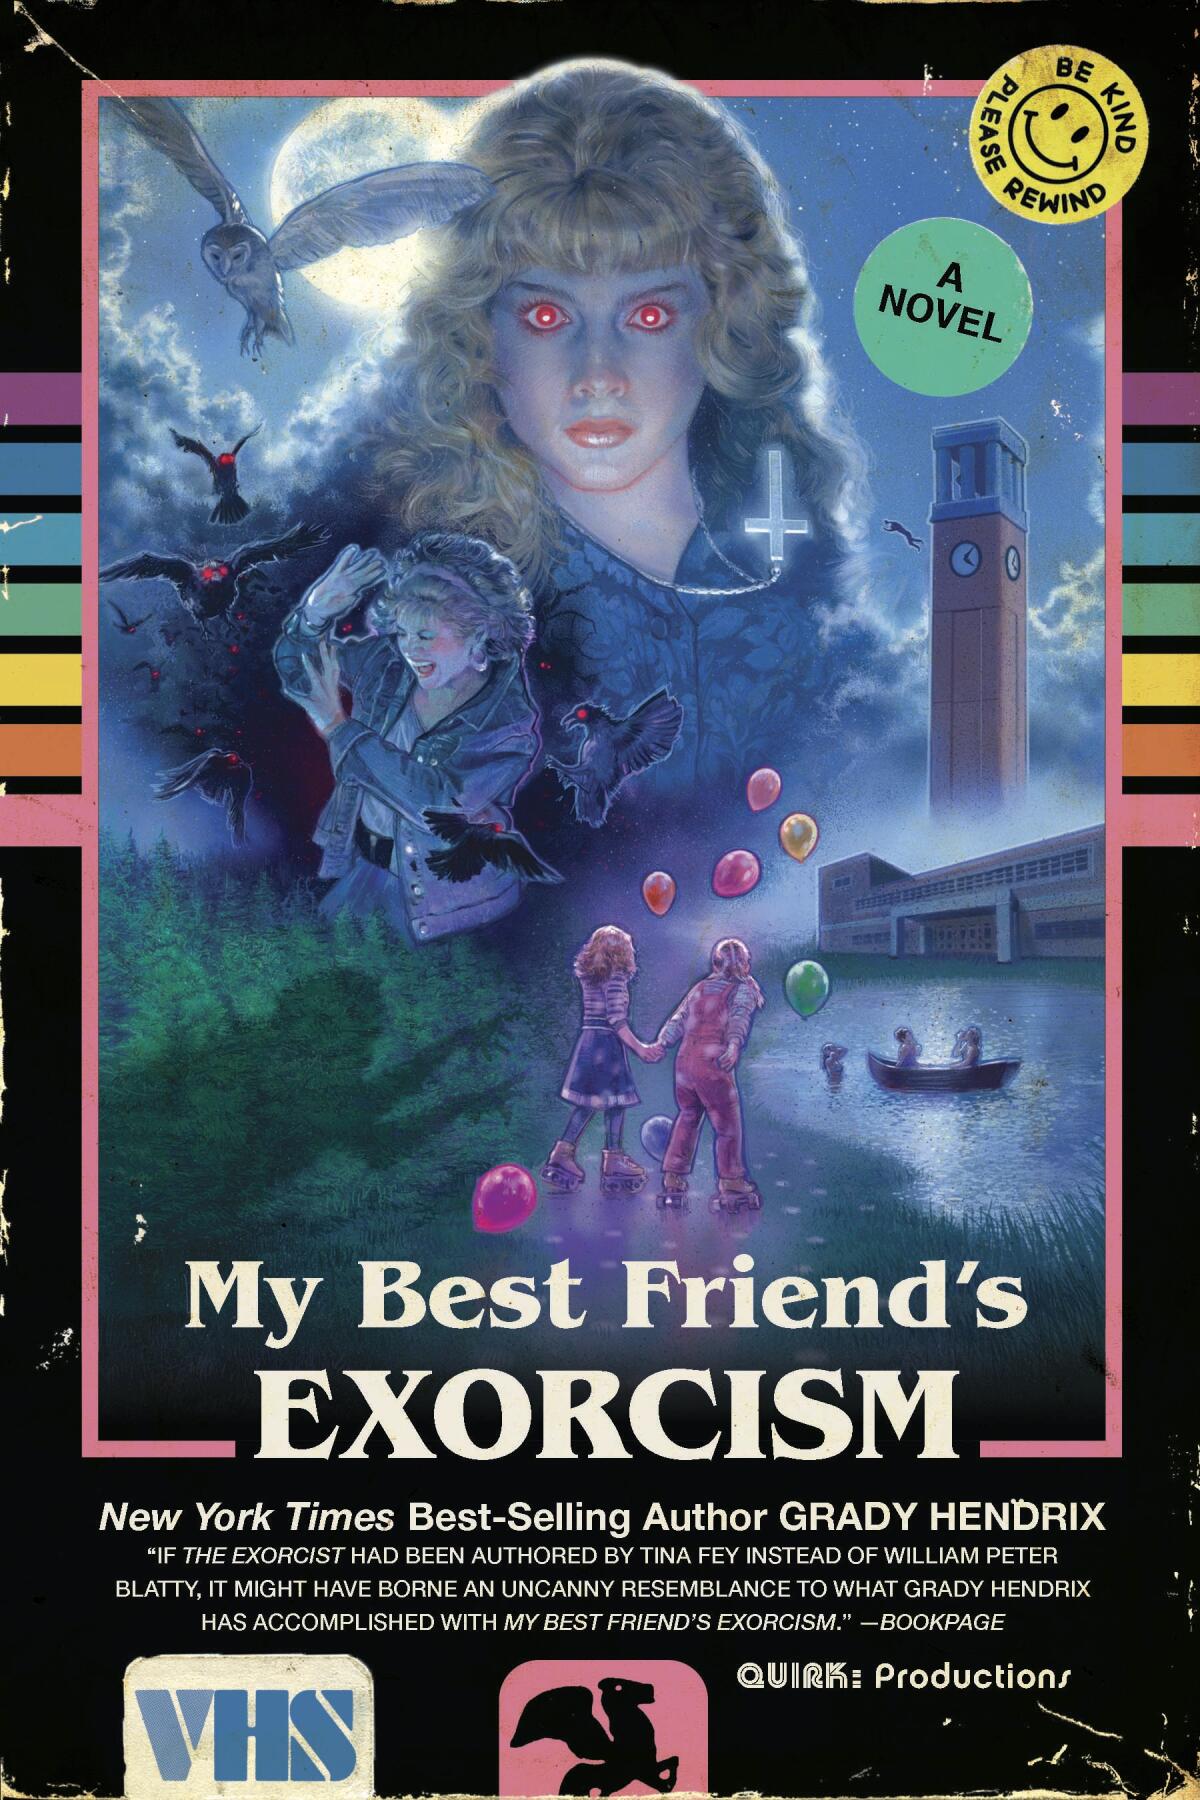 "My Best Friend's Exorcism," by Grady Hendrix